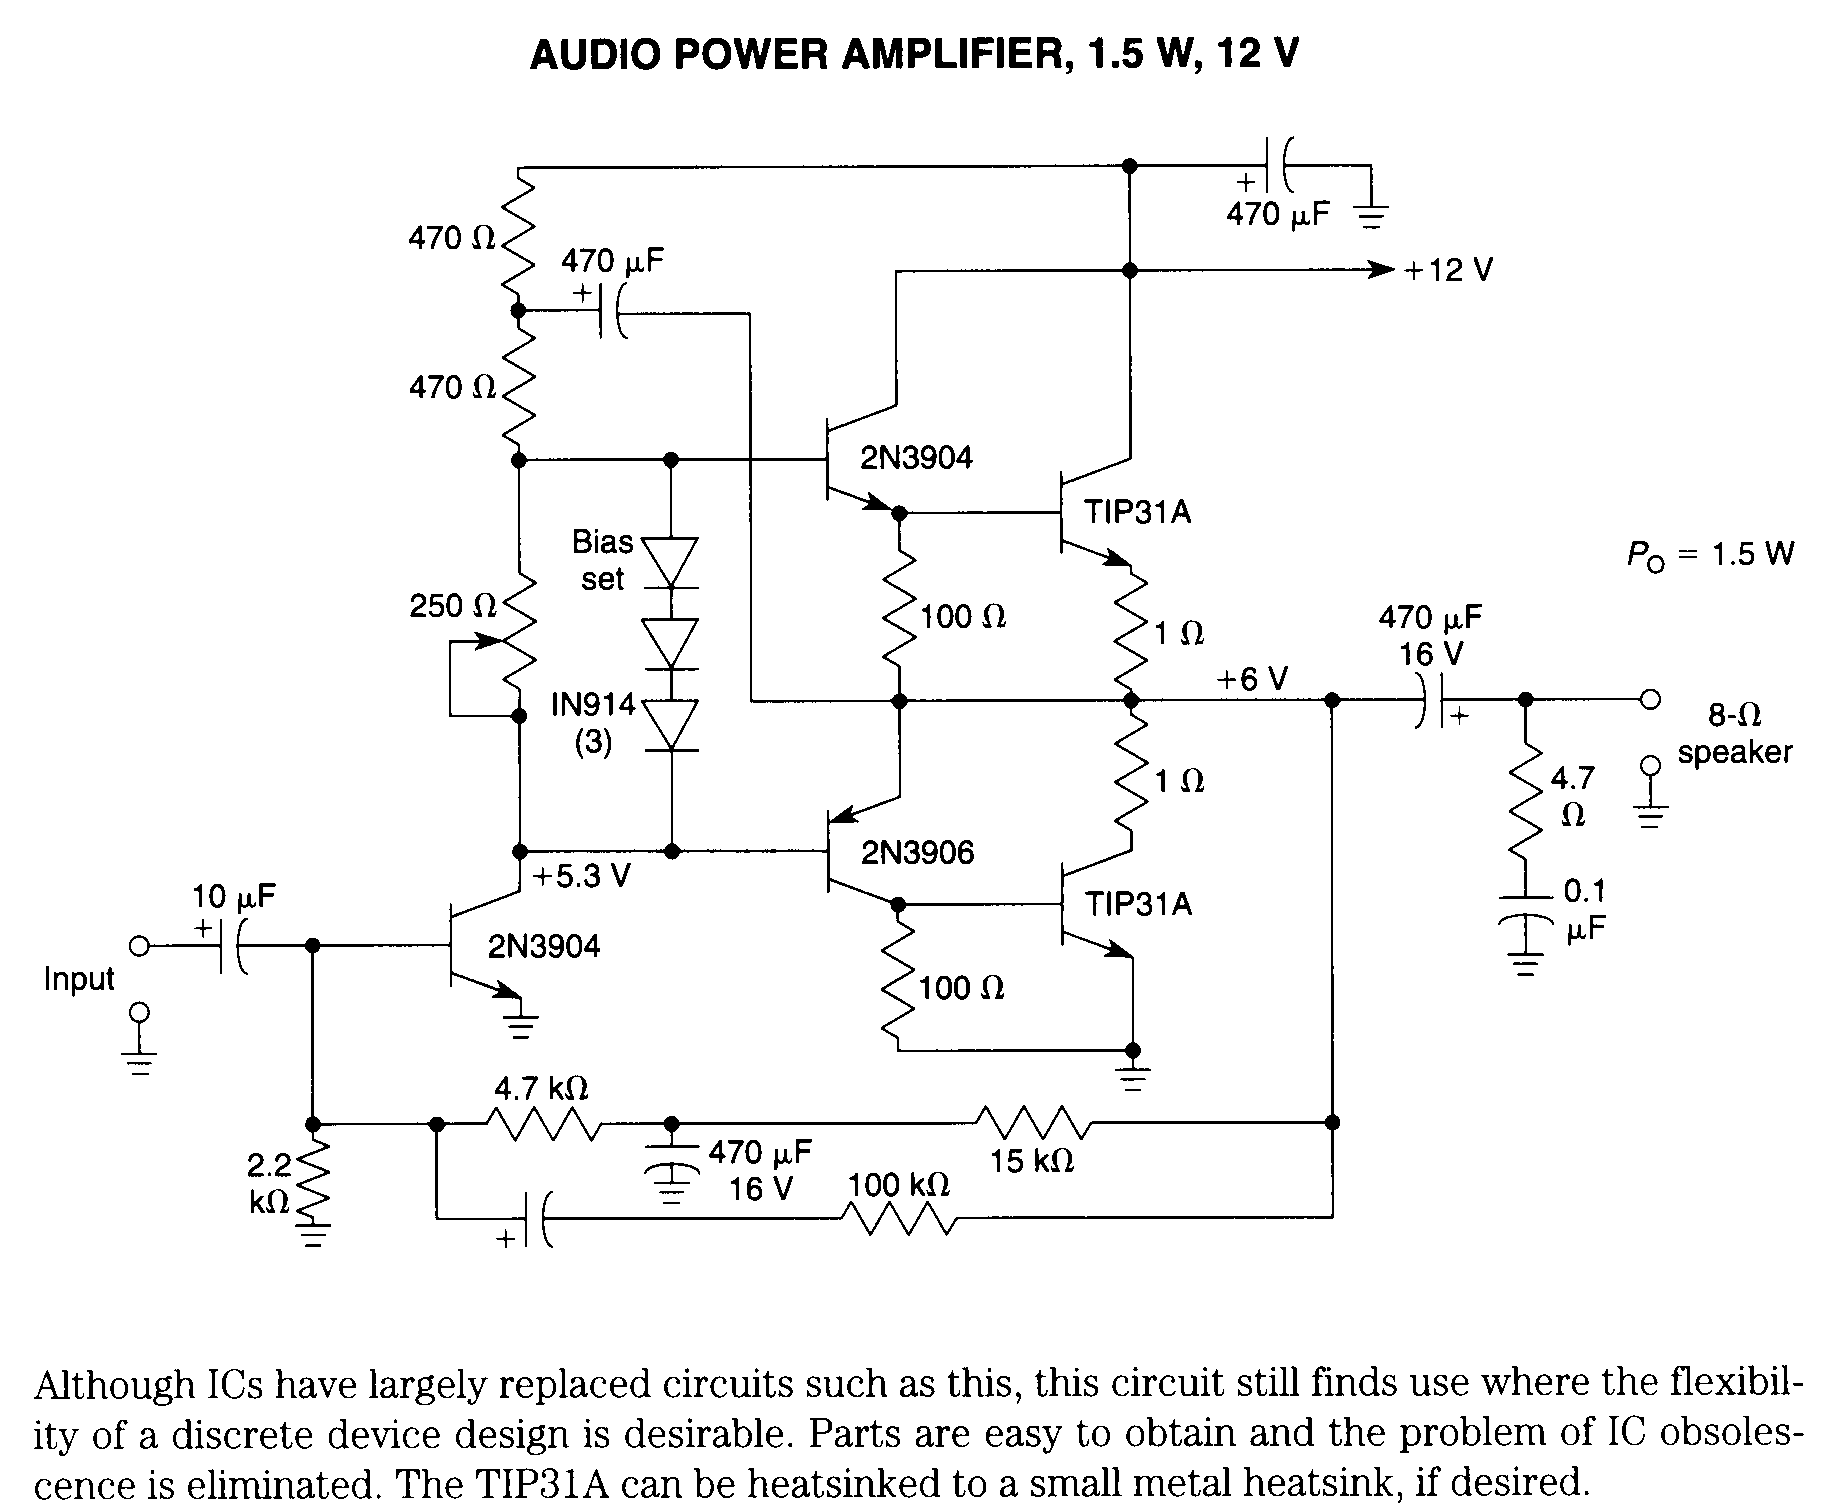 1.5w 12v audio amplifier - Amplifier_Circuit - Circuit ...